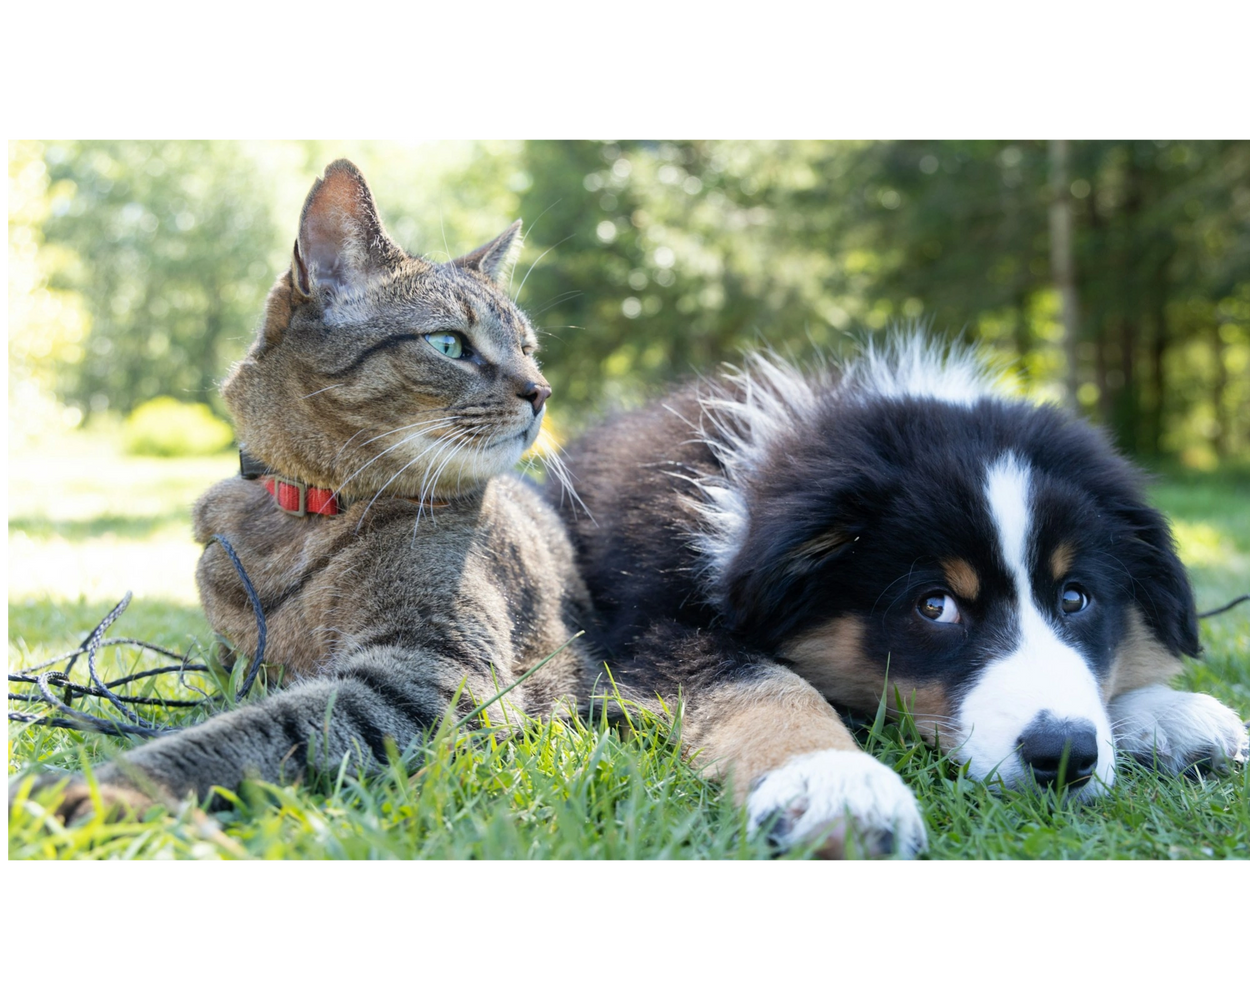 #dogs #cats #preventivecare #veterinarian
#petcare #BookOnline 
#HealthierPetVeterinaryCare
